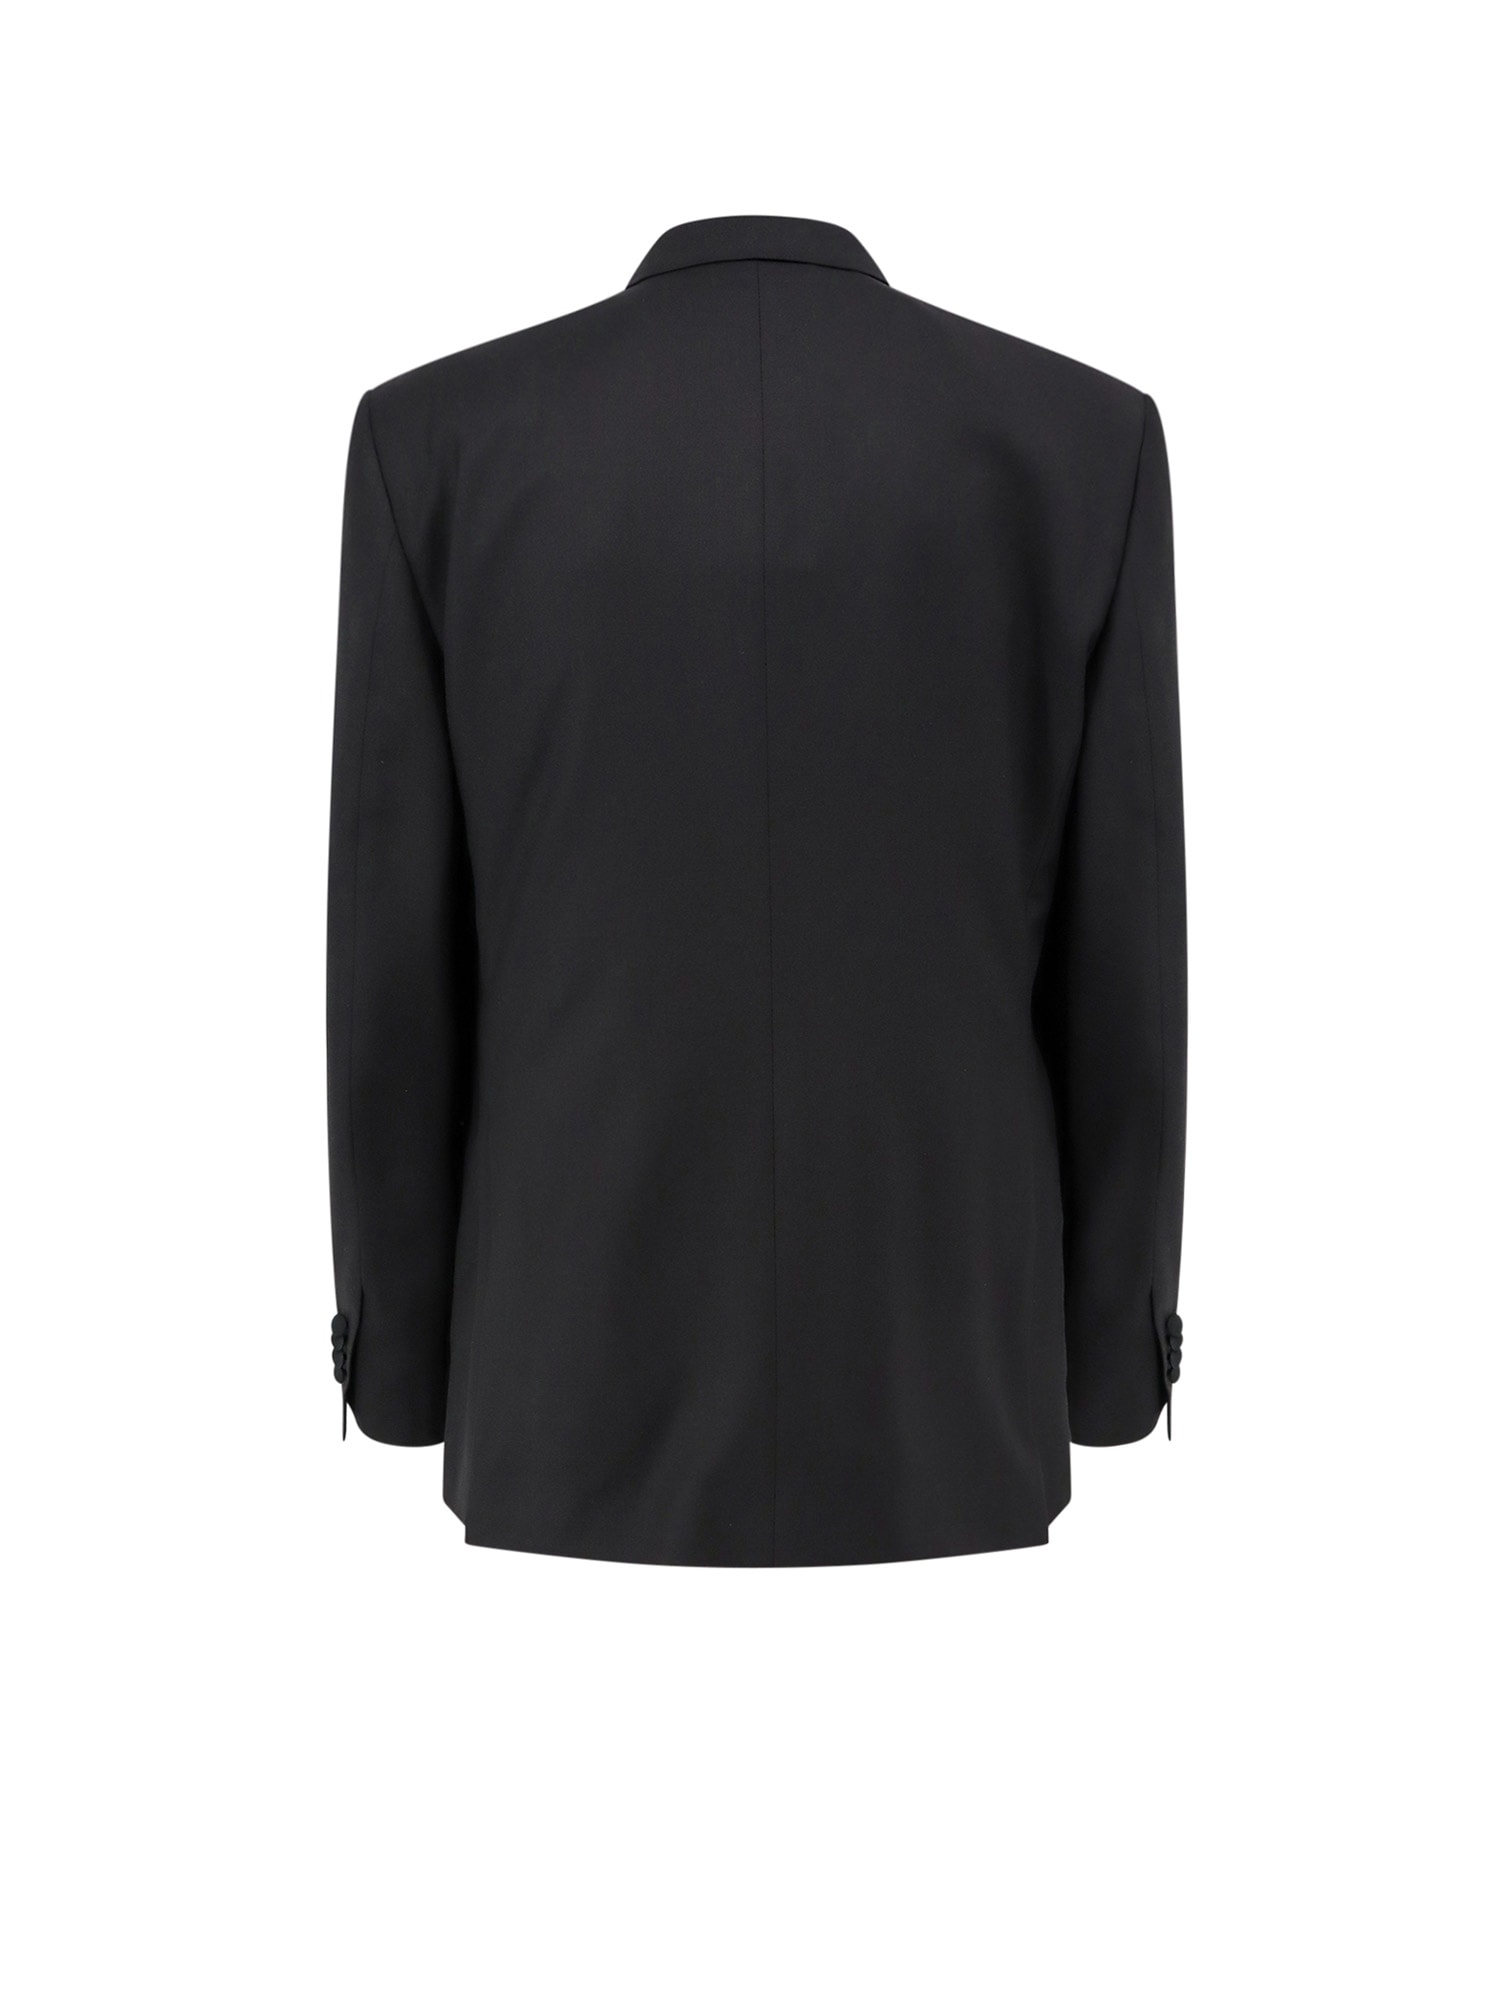 Shop Lardini Evento Tuxedo In Black